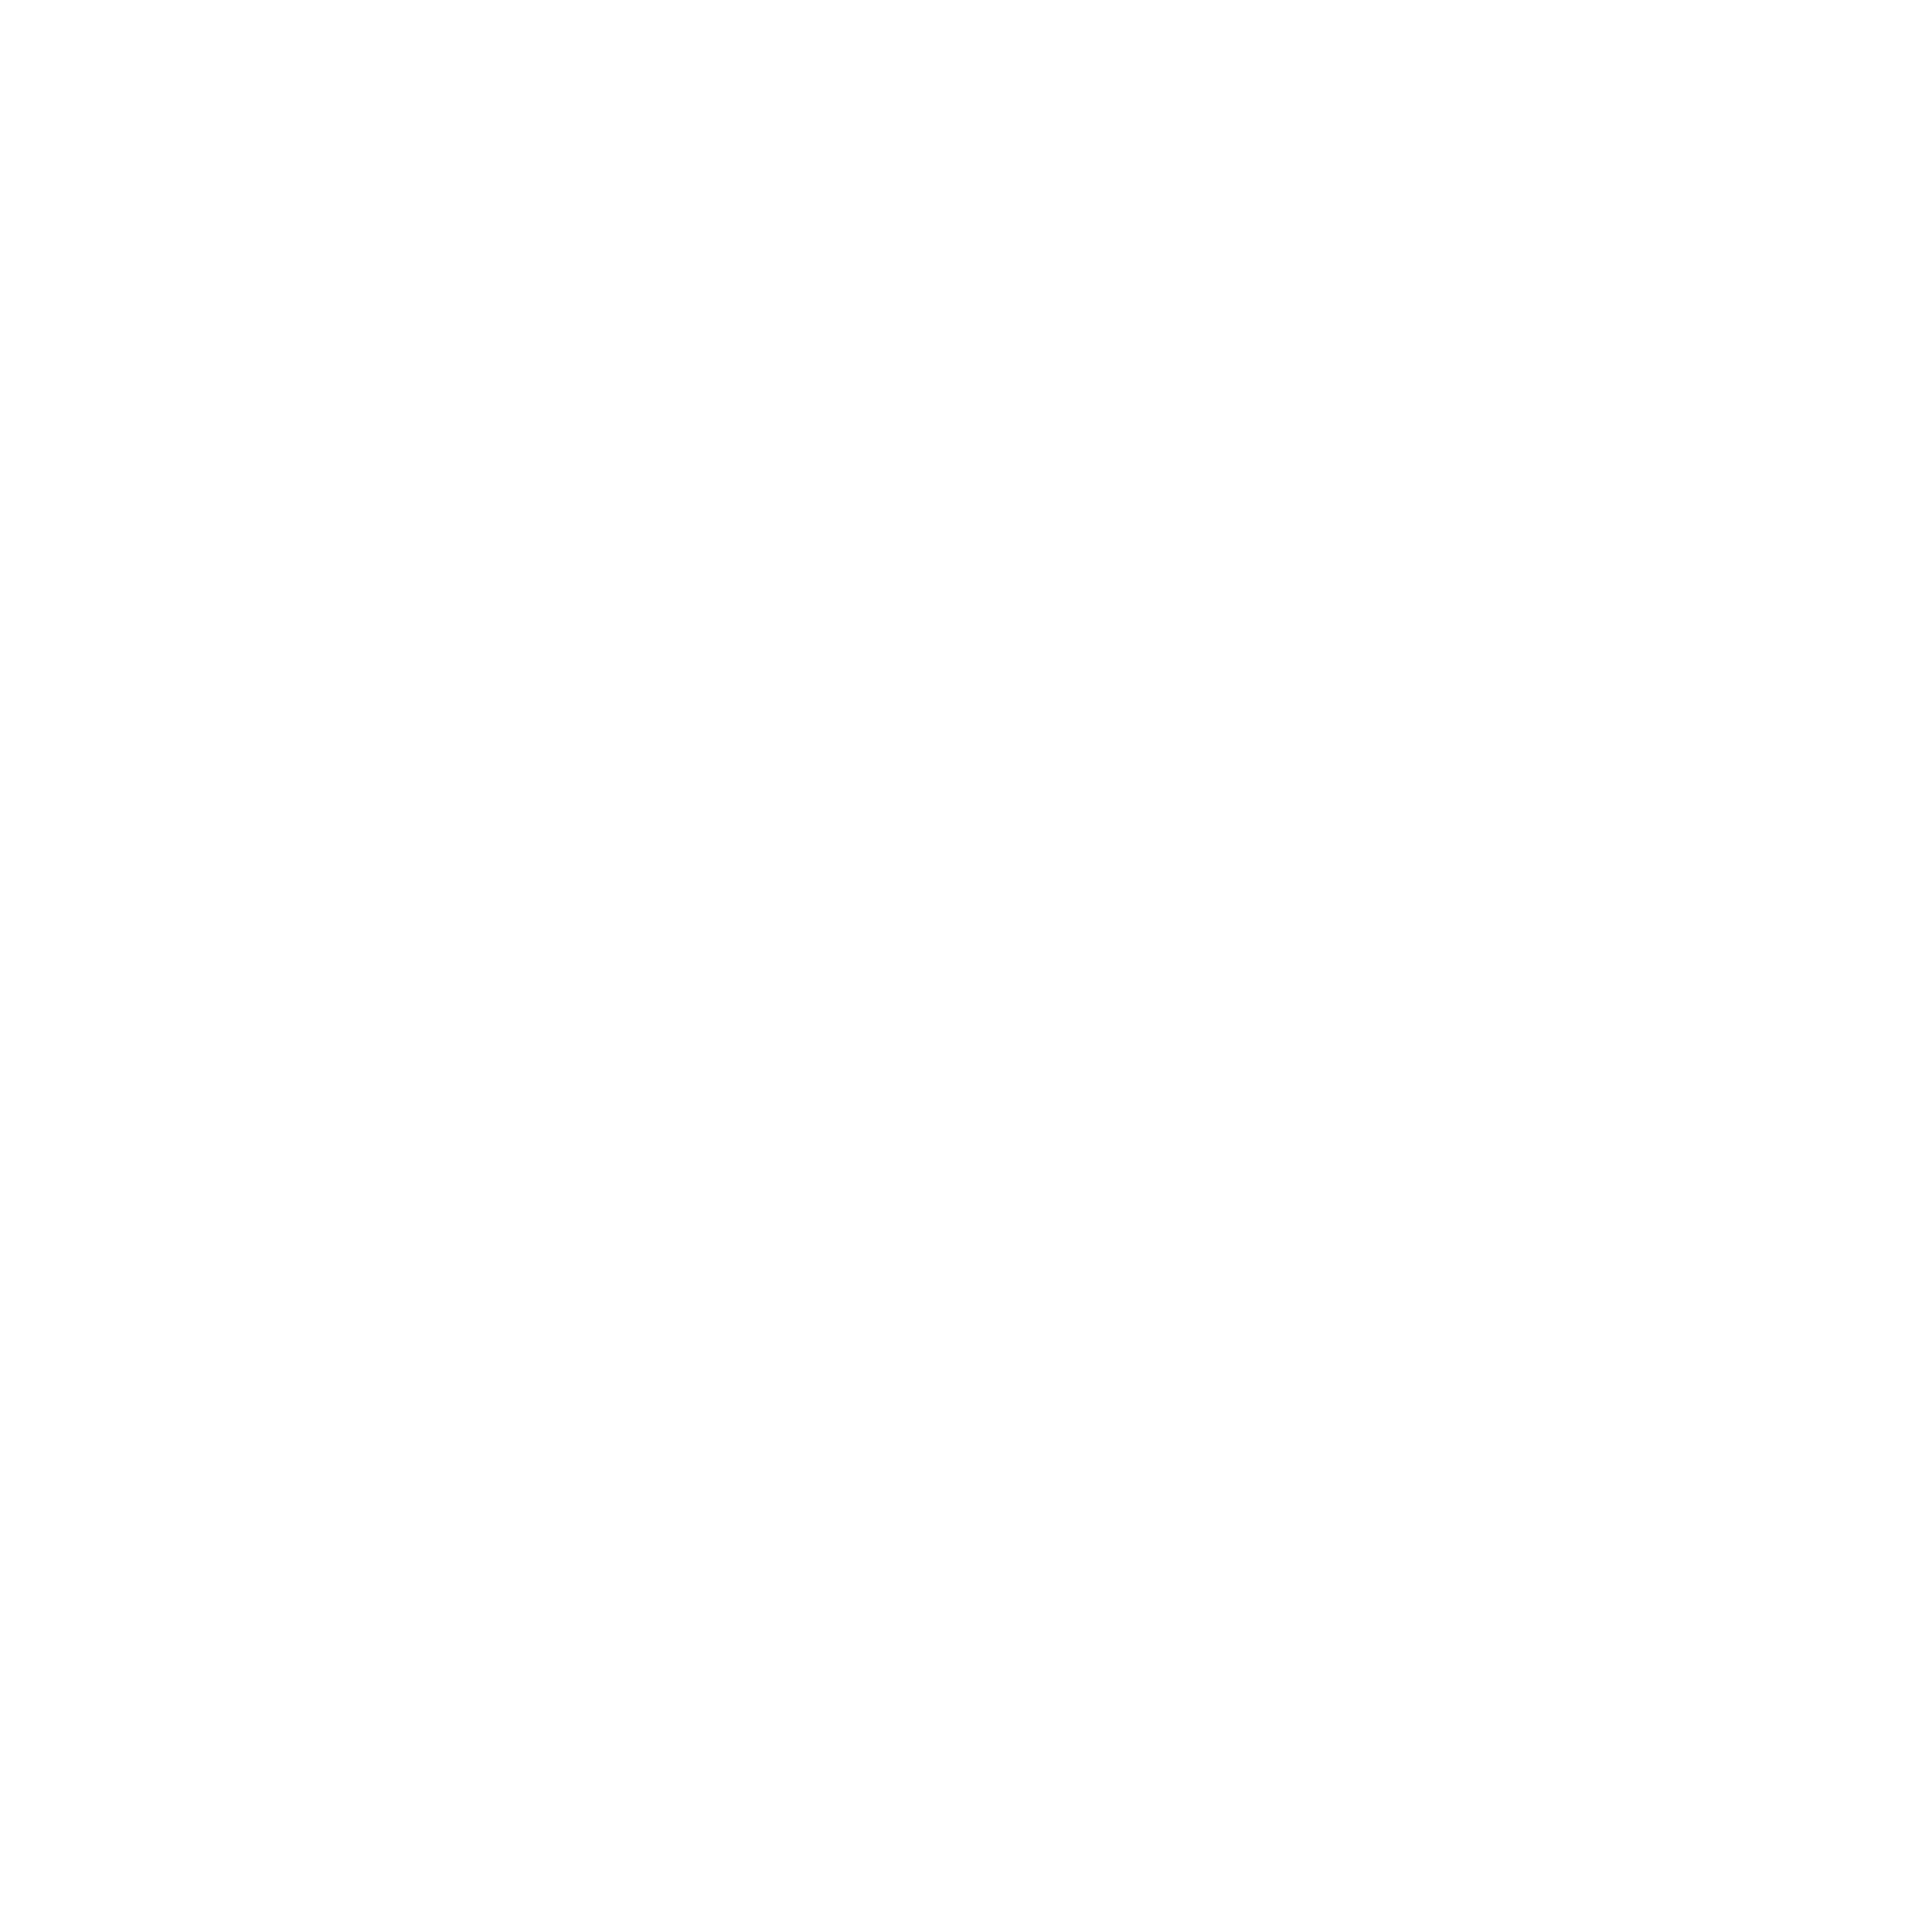 Official logo of Hungarian Rockstar Club.